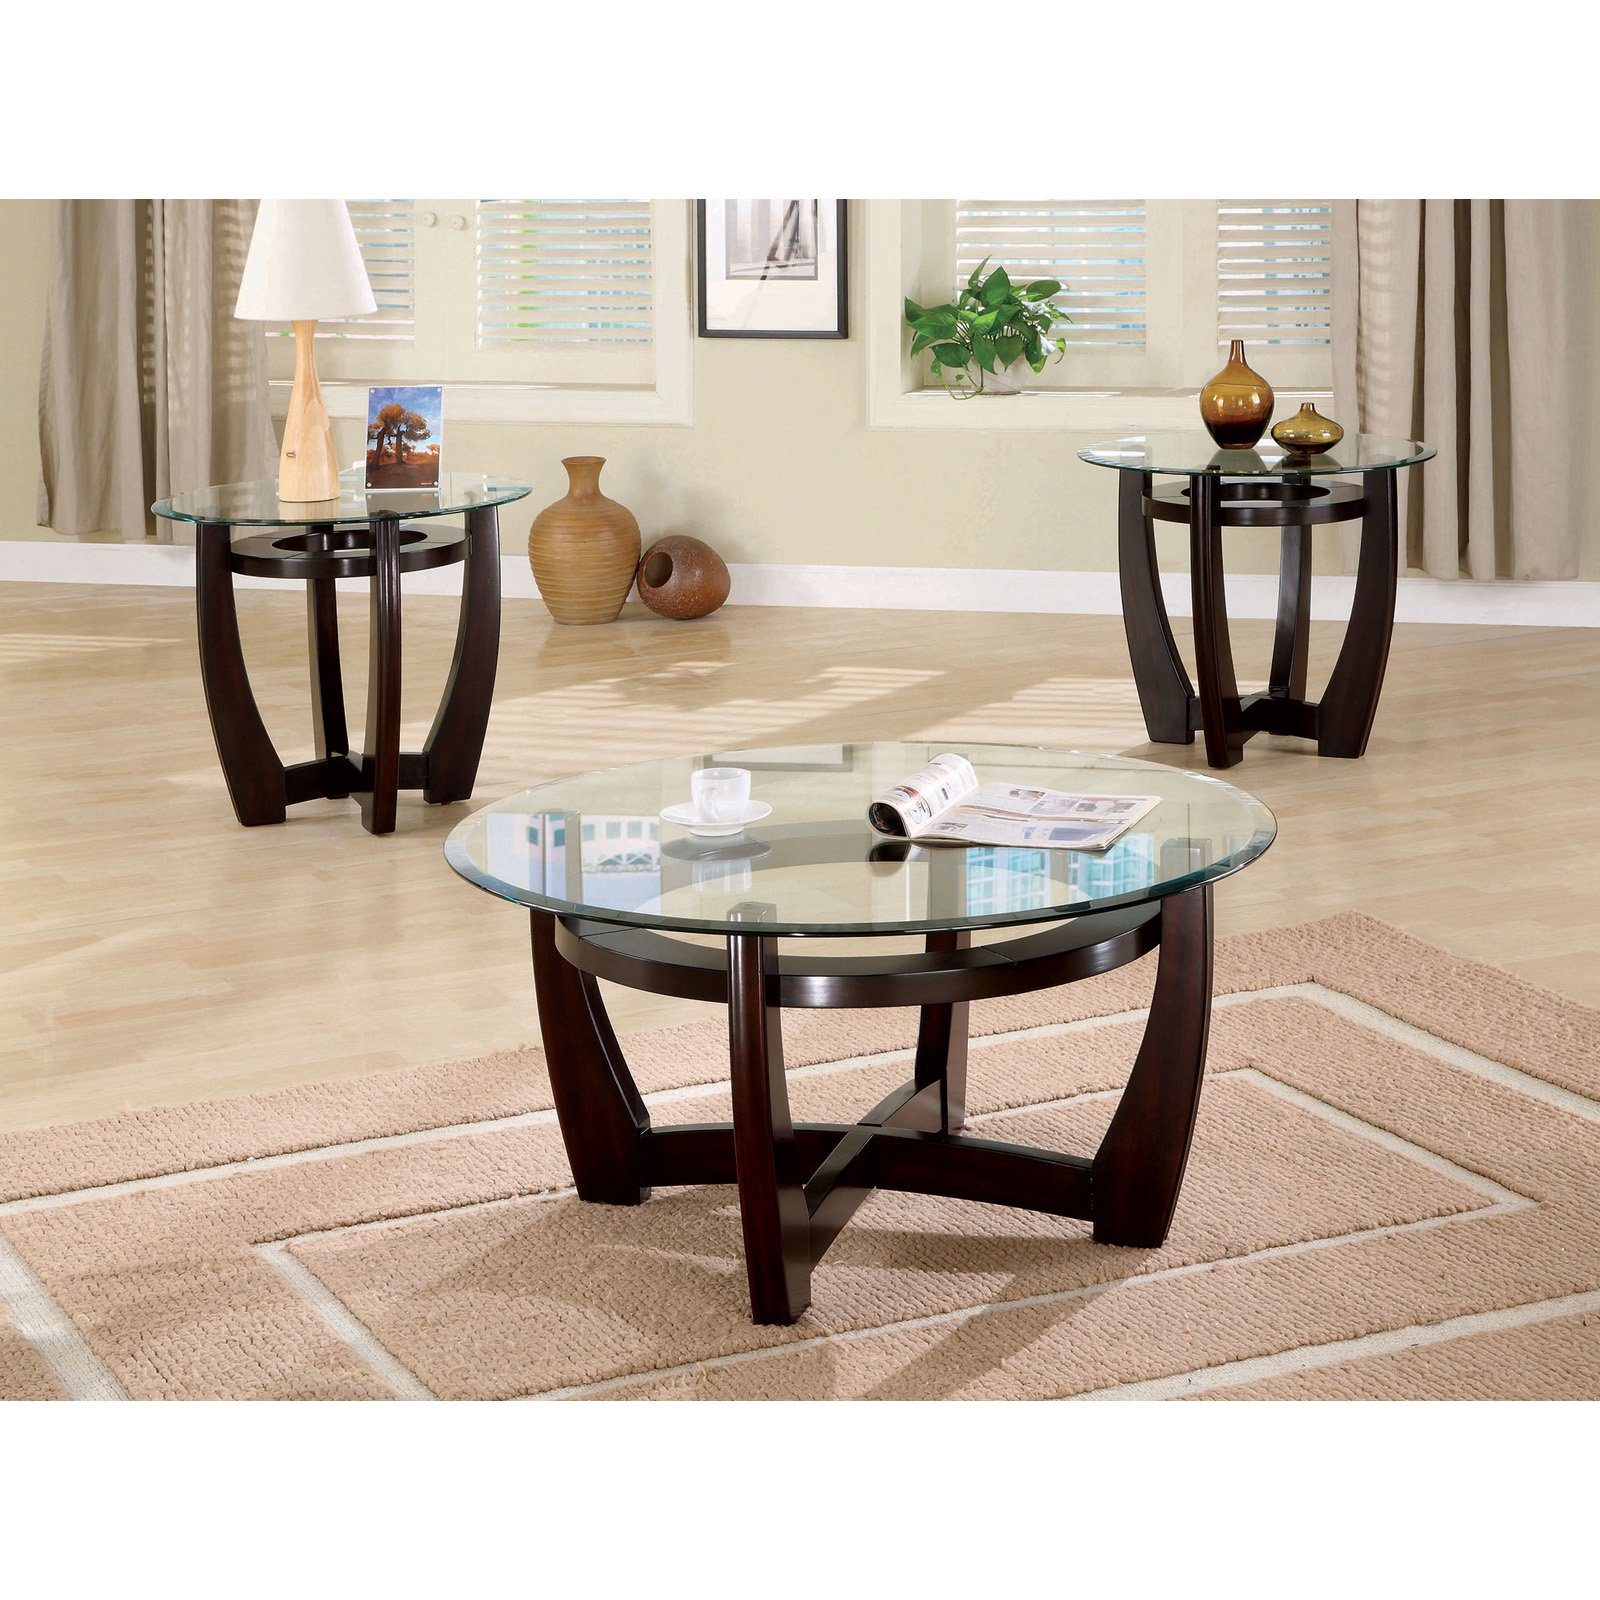 Coaster Furniture 3 Piece Glass Top Coffee Table Set Walmart in measurements 1600 X 1600